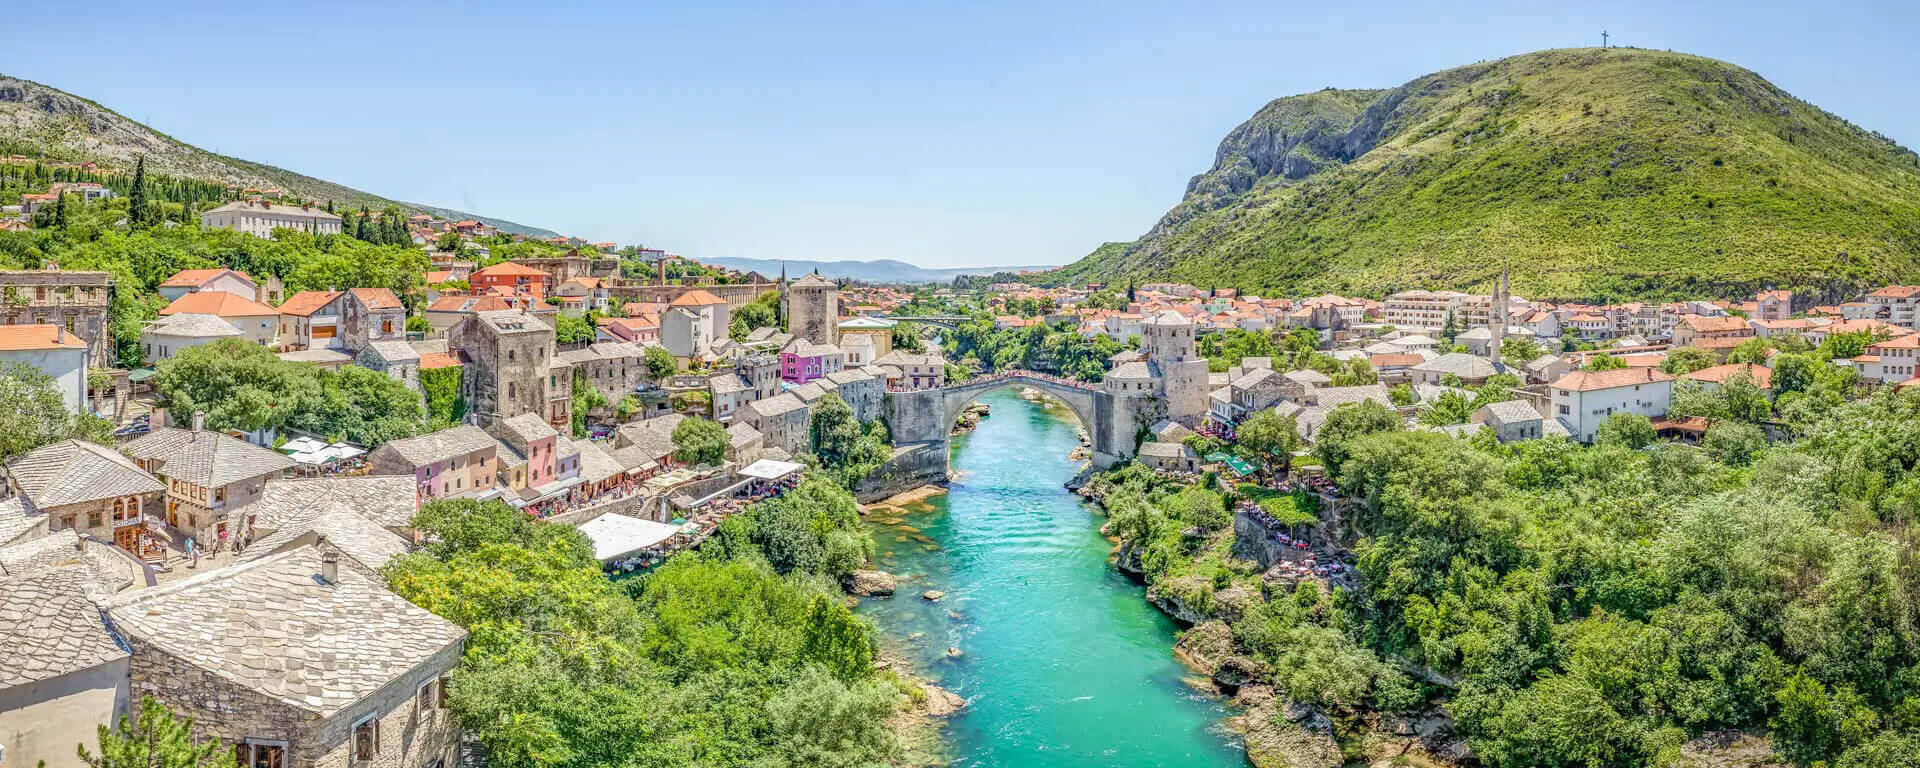 Bosnia and Herzegovina Tourist Attractions